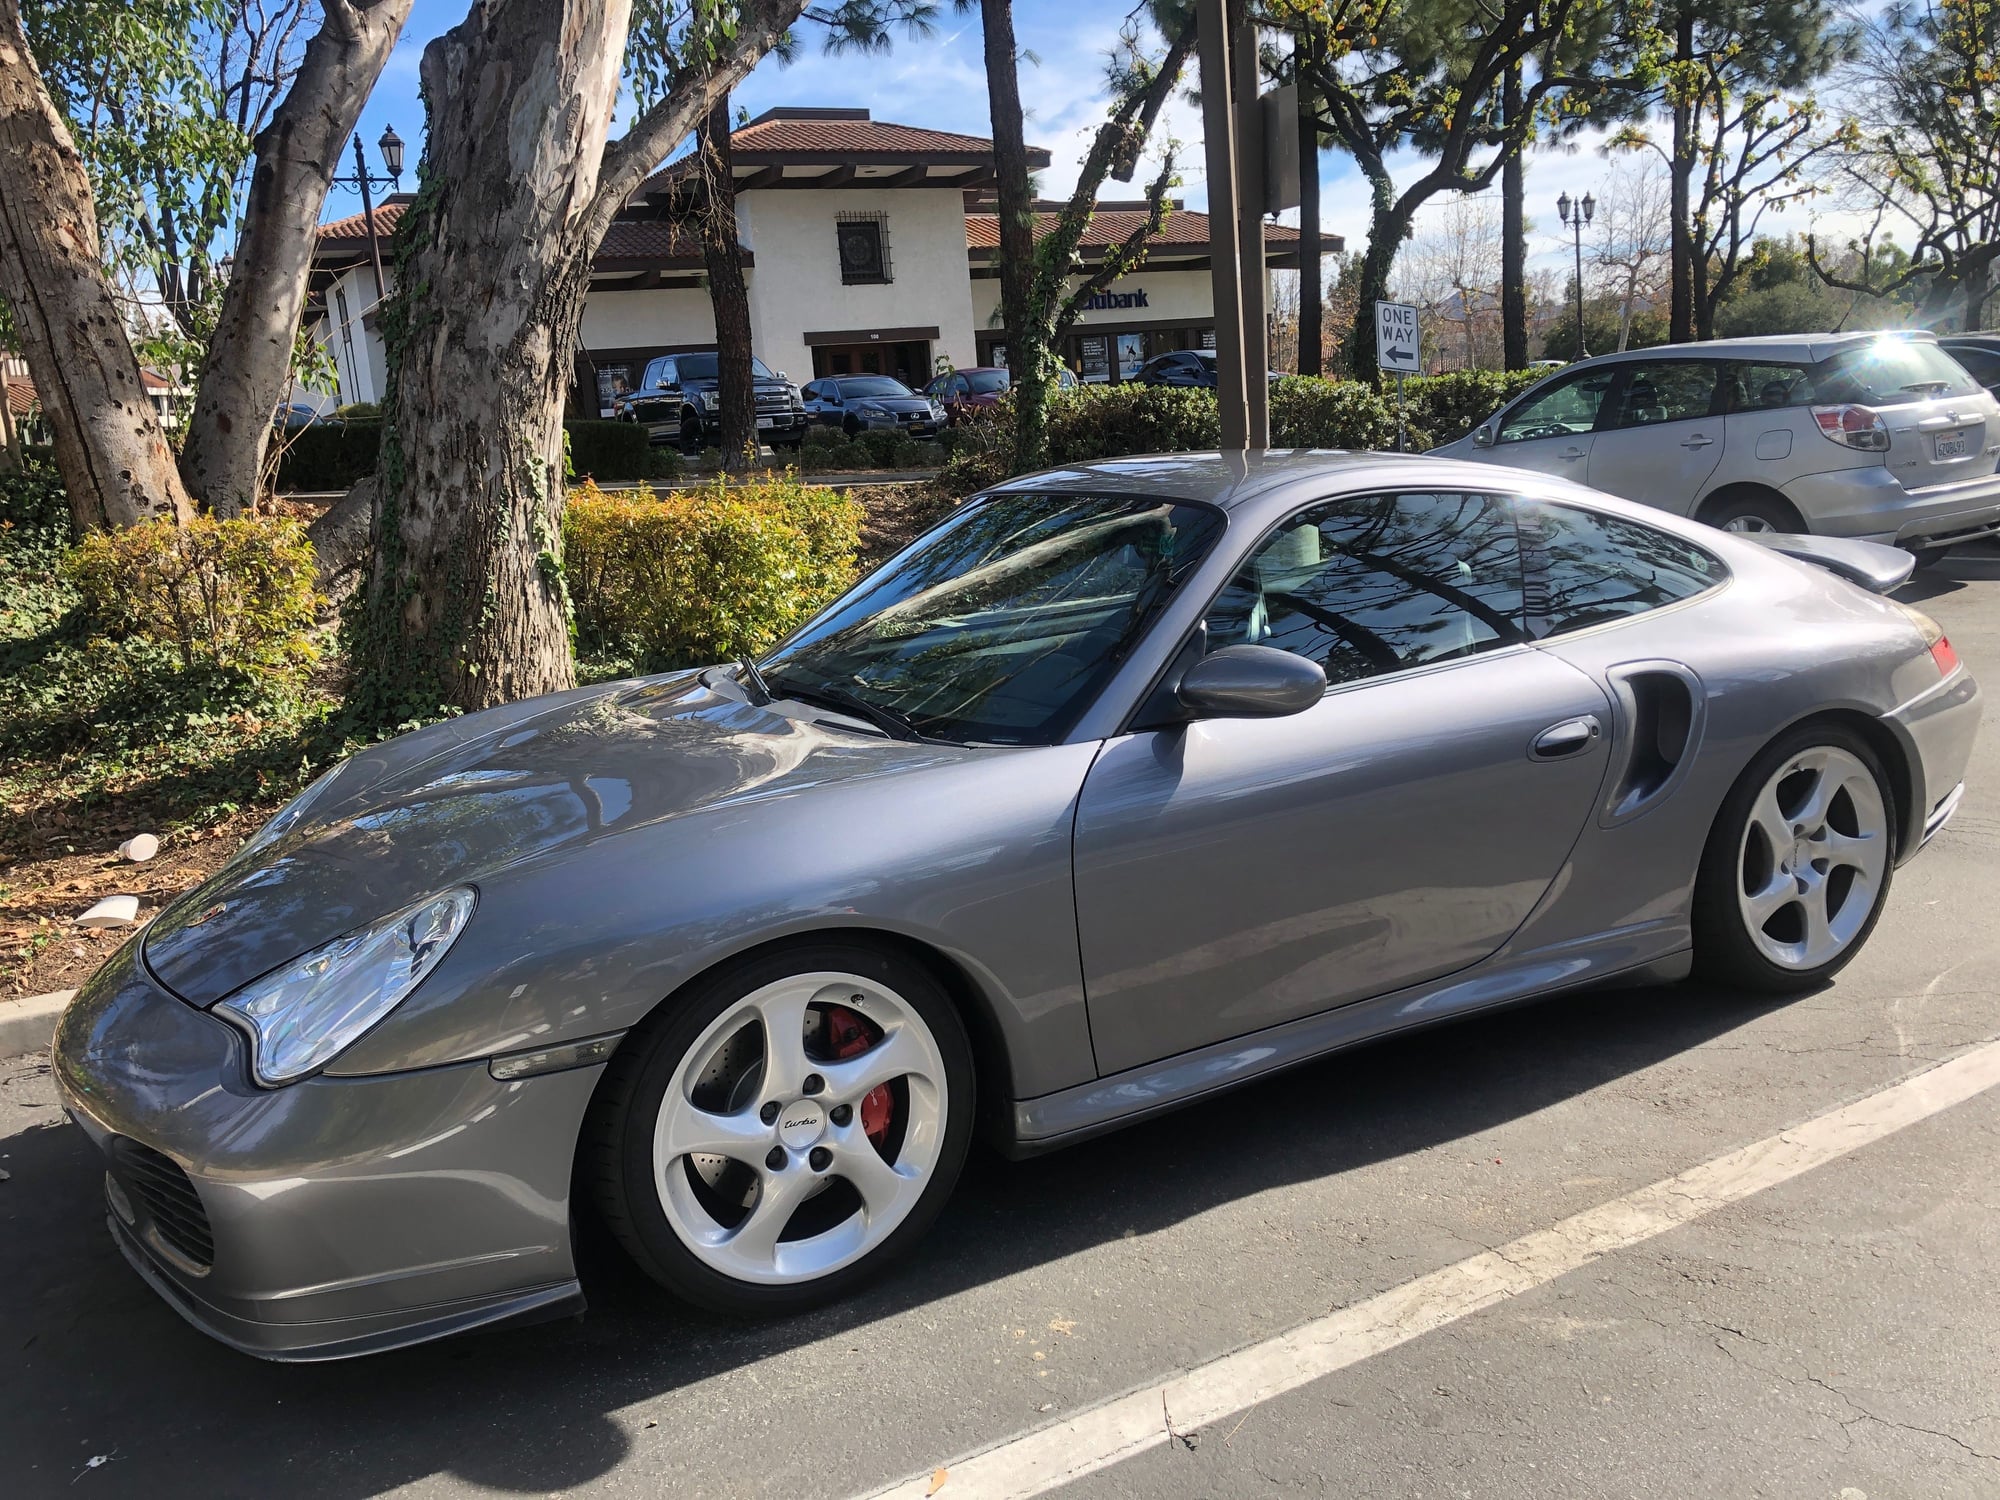 2002 Porsche 911 - Very Rare Spec 996 Turbo - Used - VIN Wp0ab29962s686113 - 56,000 Miles - 6 cyl - AWD - Manual - Coupe - Gray - Tarzana, CA 91356, United States